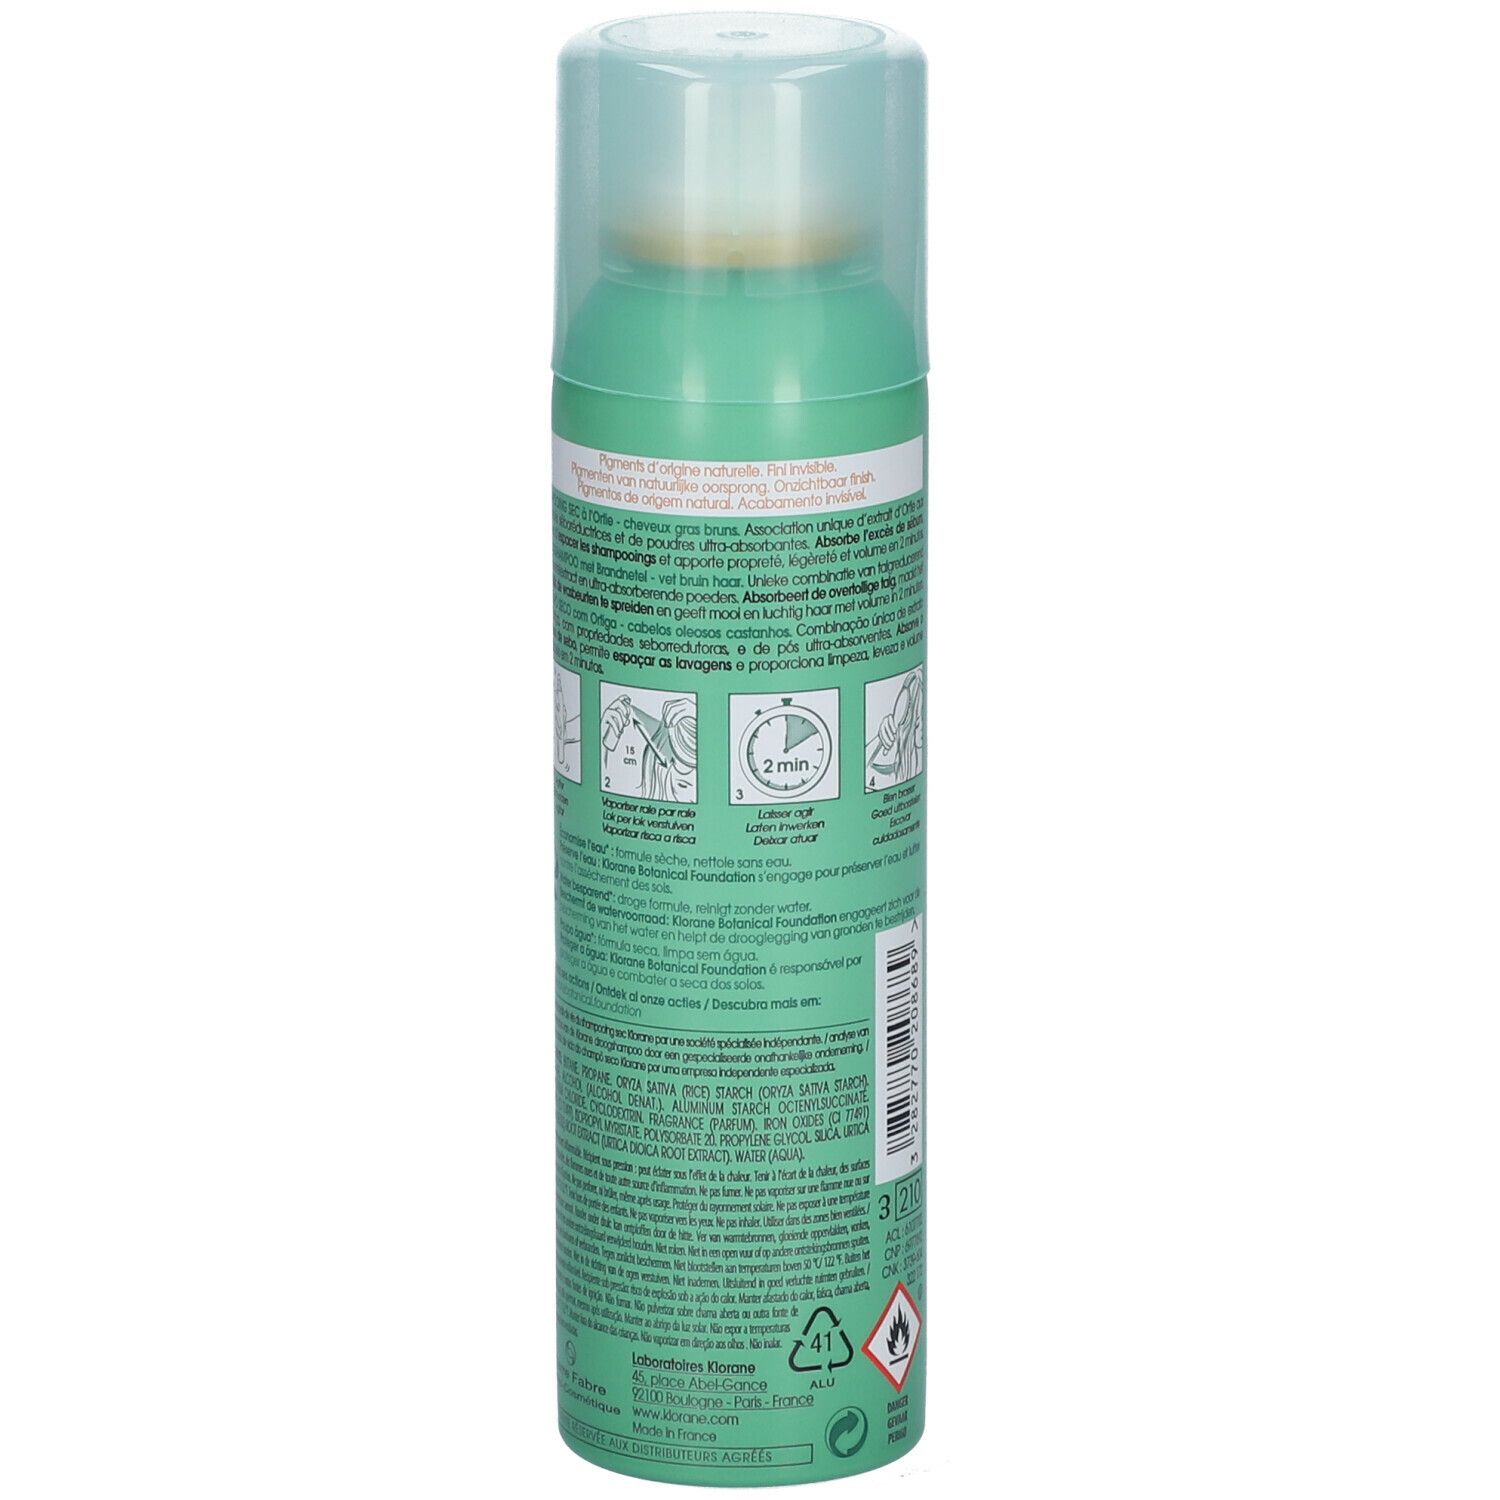 Klorane Dry Shampoo with Nettle Oil Control Dark Hair